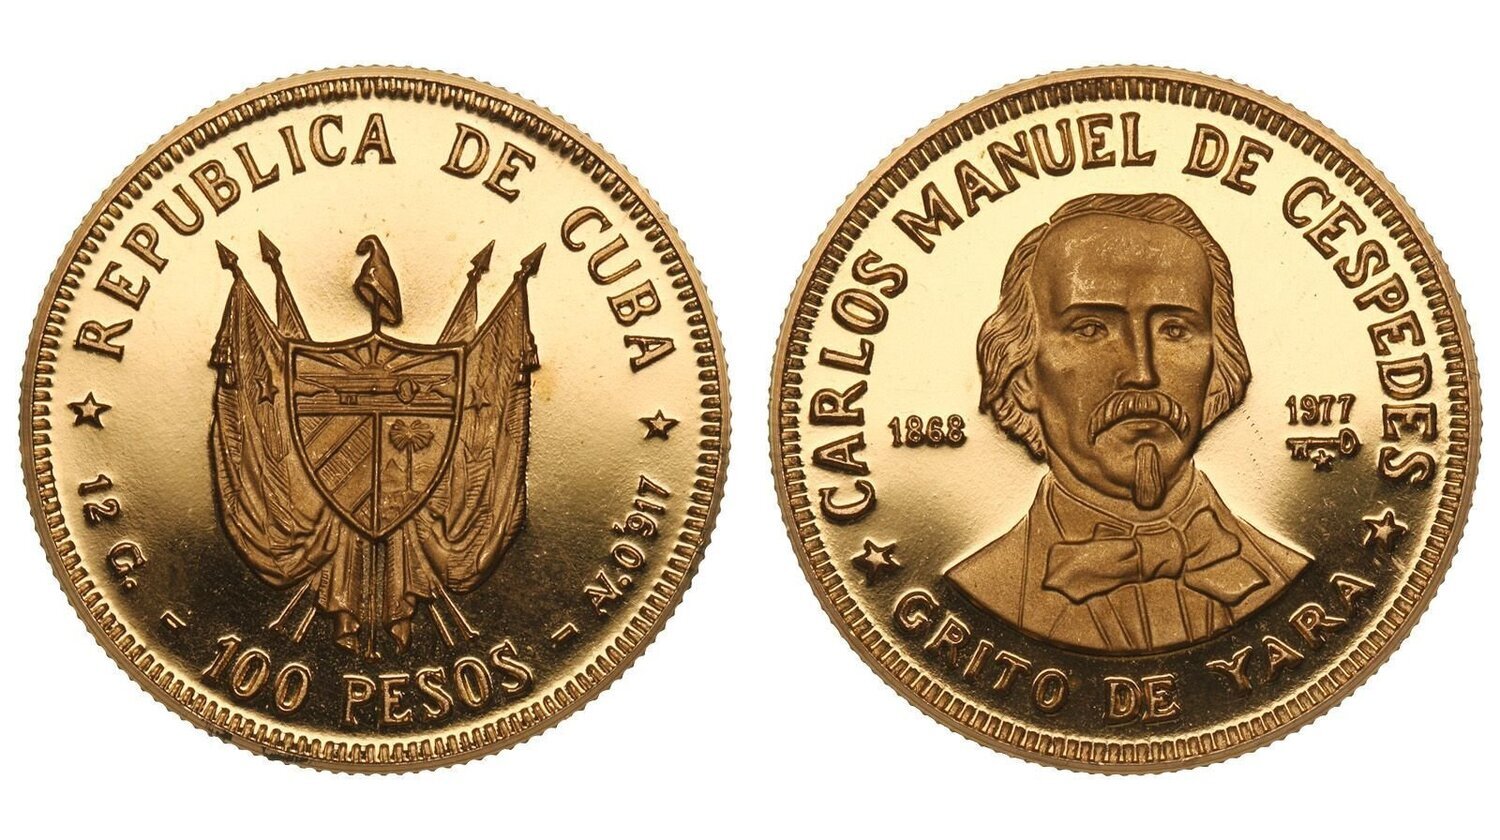 Cuba. 1981. 100 pesos. Series: Discovery of America. #02. Columbus ship - Pinta. 0.917 Gold. 0.3538 Oz AGW 12.0g., BU. KM#. UNC. Mintage: 2,000